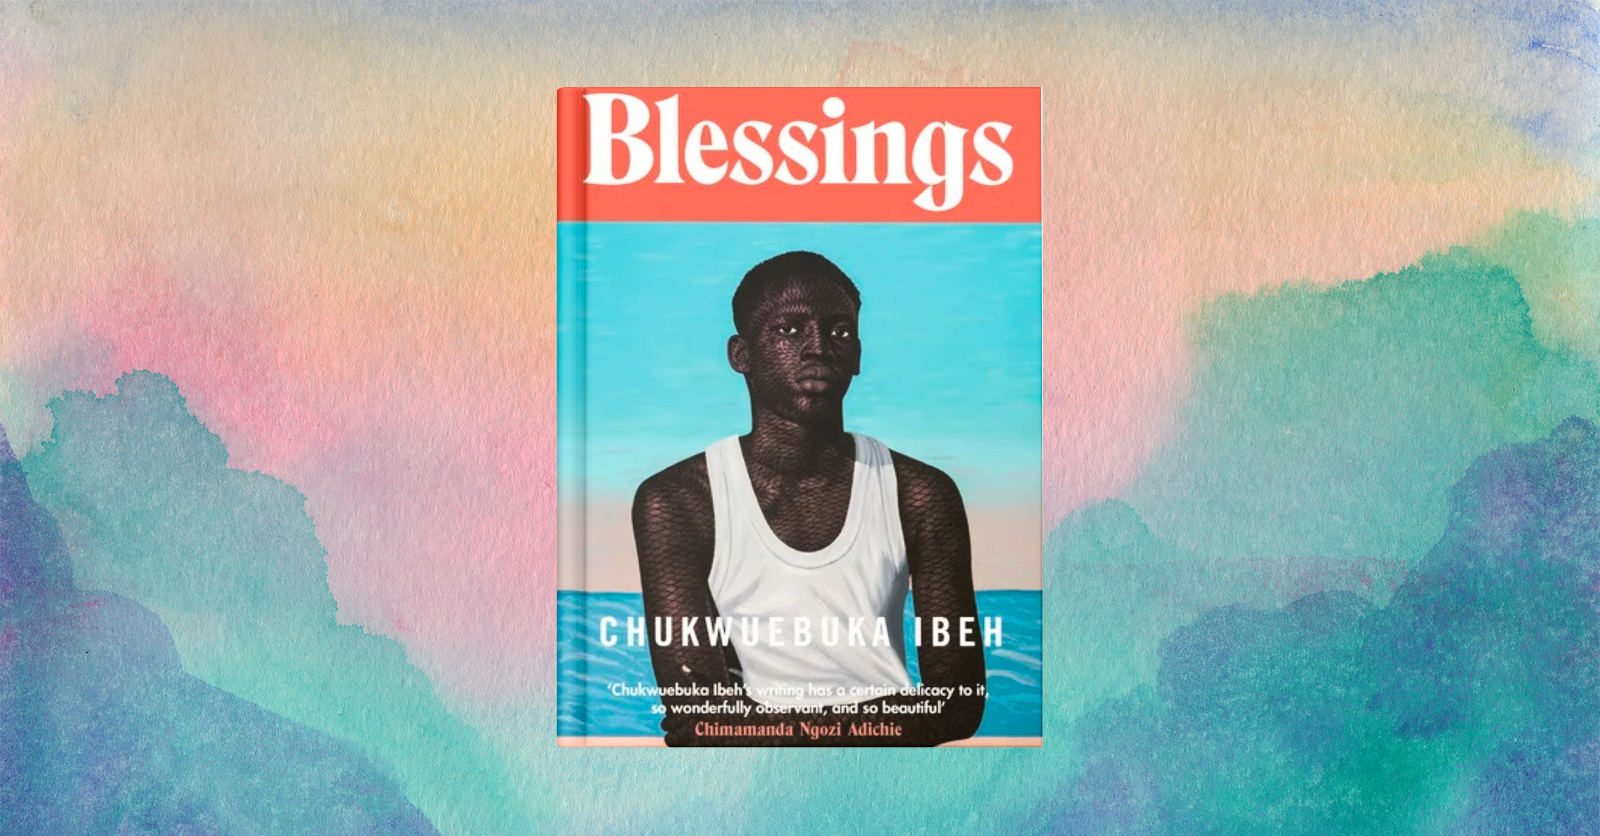 Blessings by Chukwuebuka Ibeh